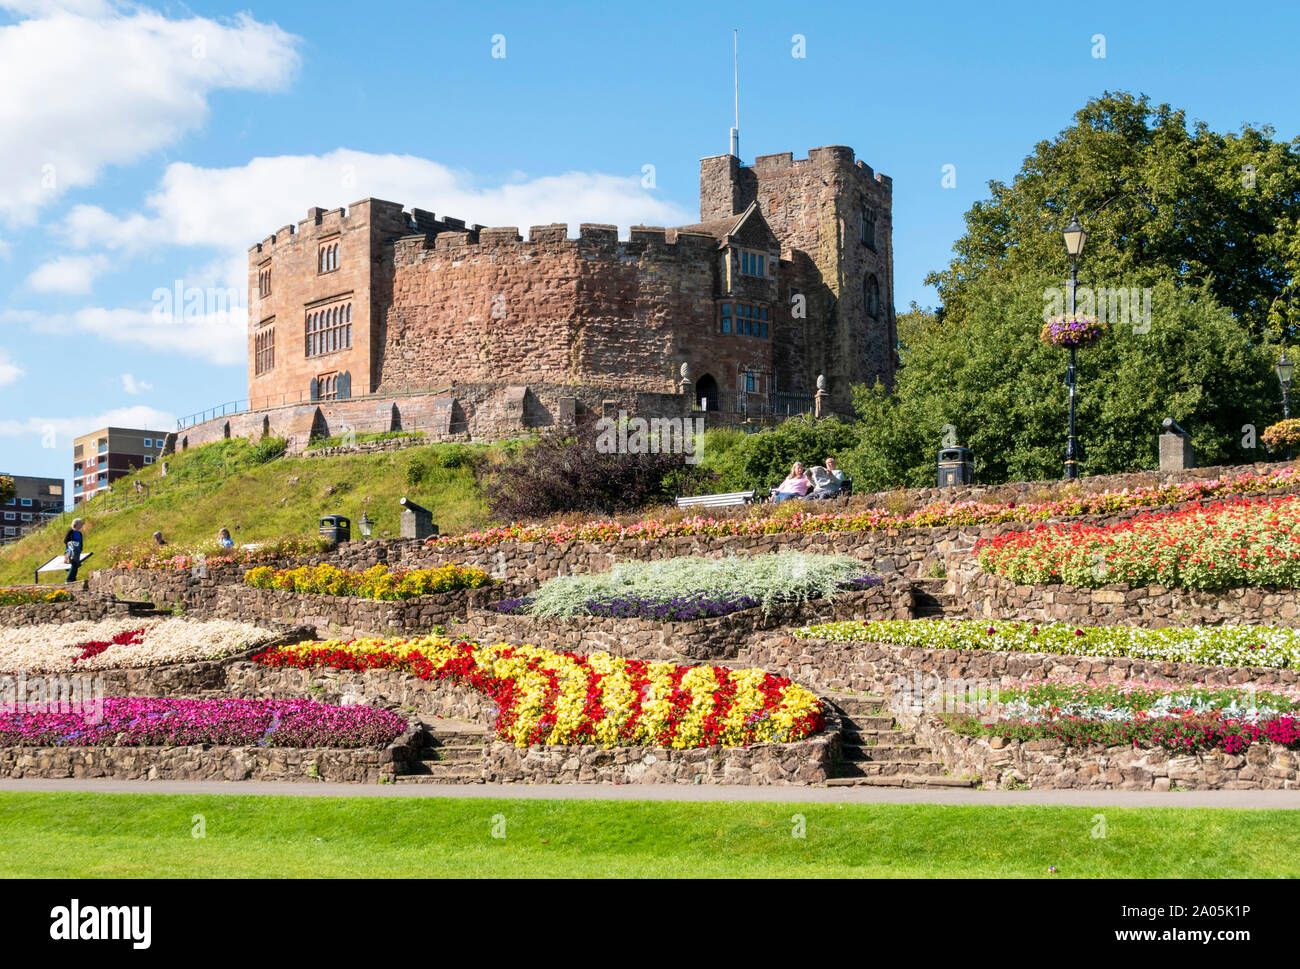 Tamworth castillo castillo medieval del centro de la ciudad de Staffordshire Inglaterra GB UK Europa Foto de stock